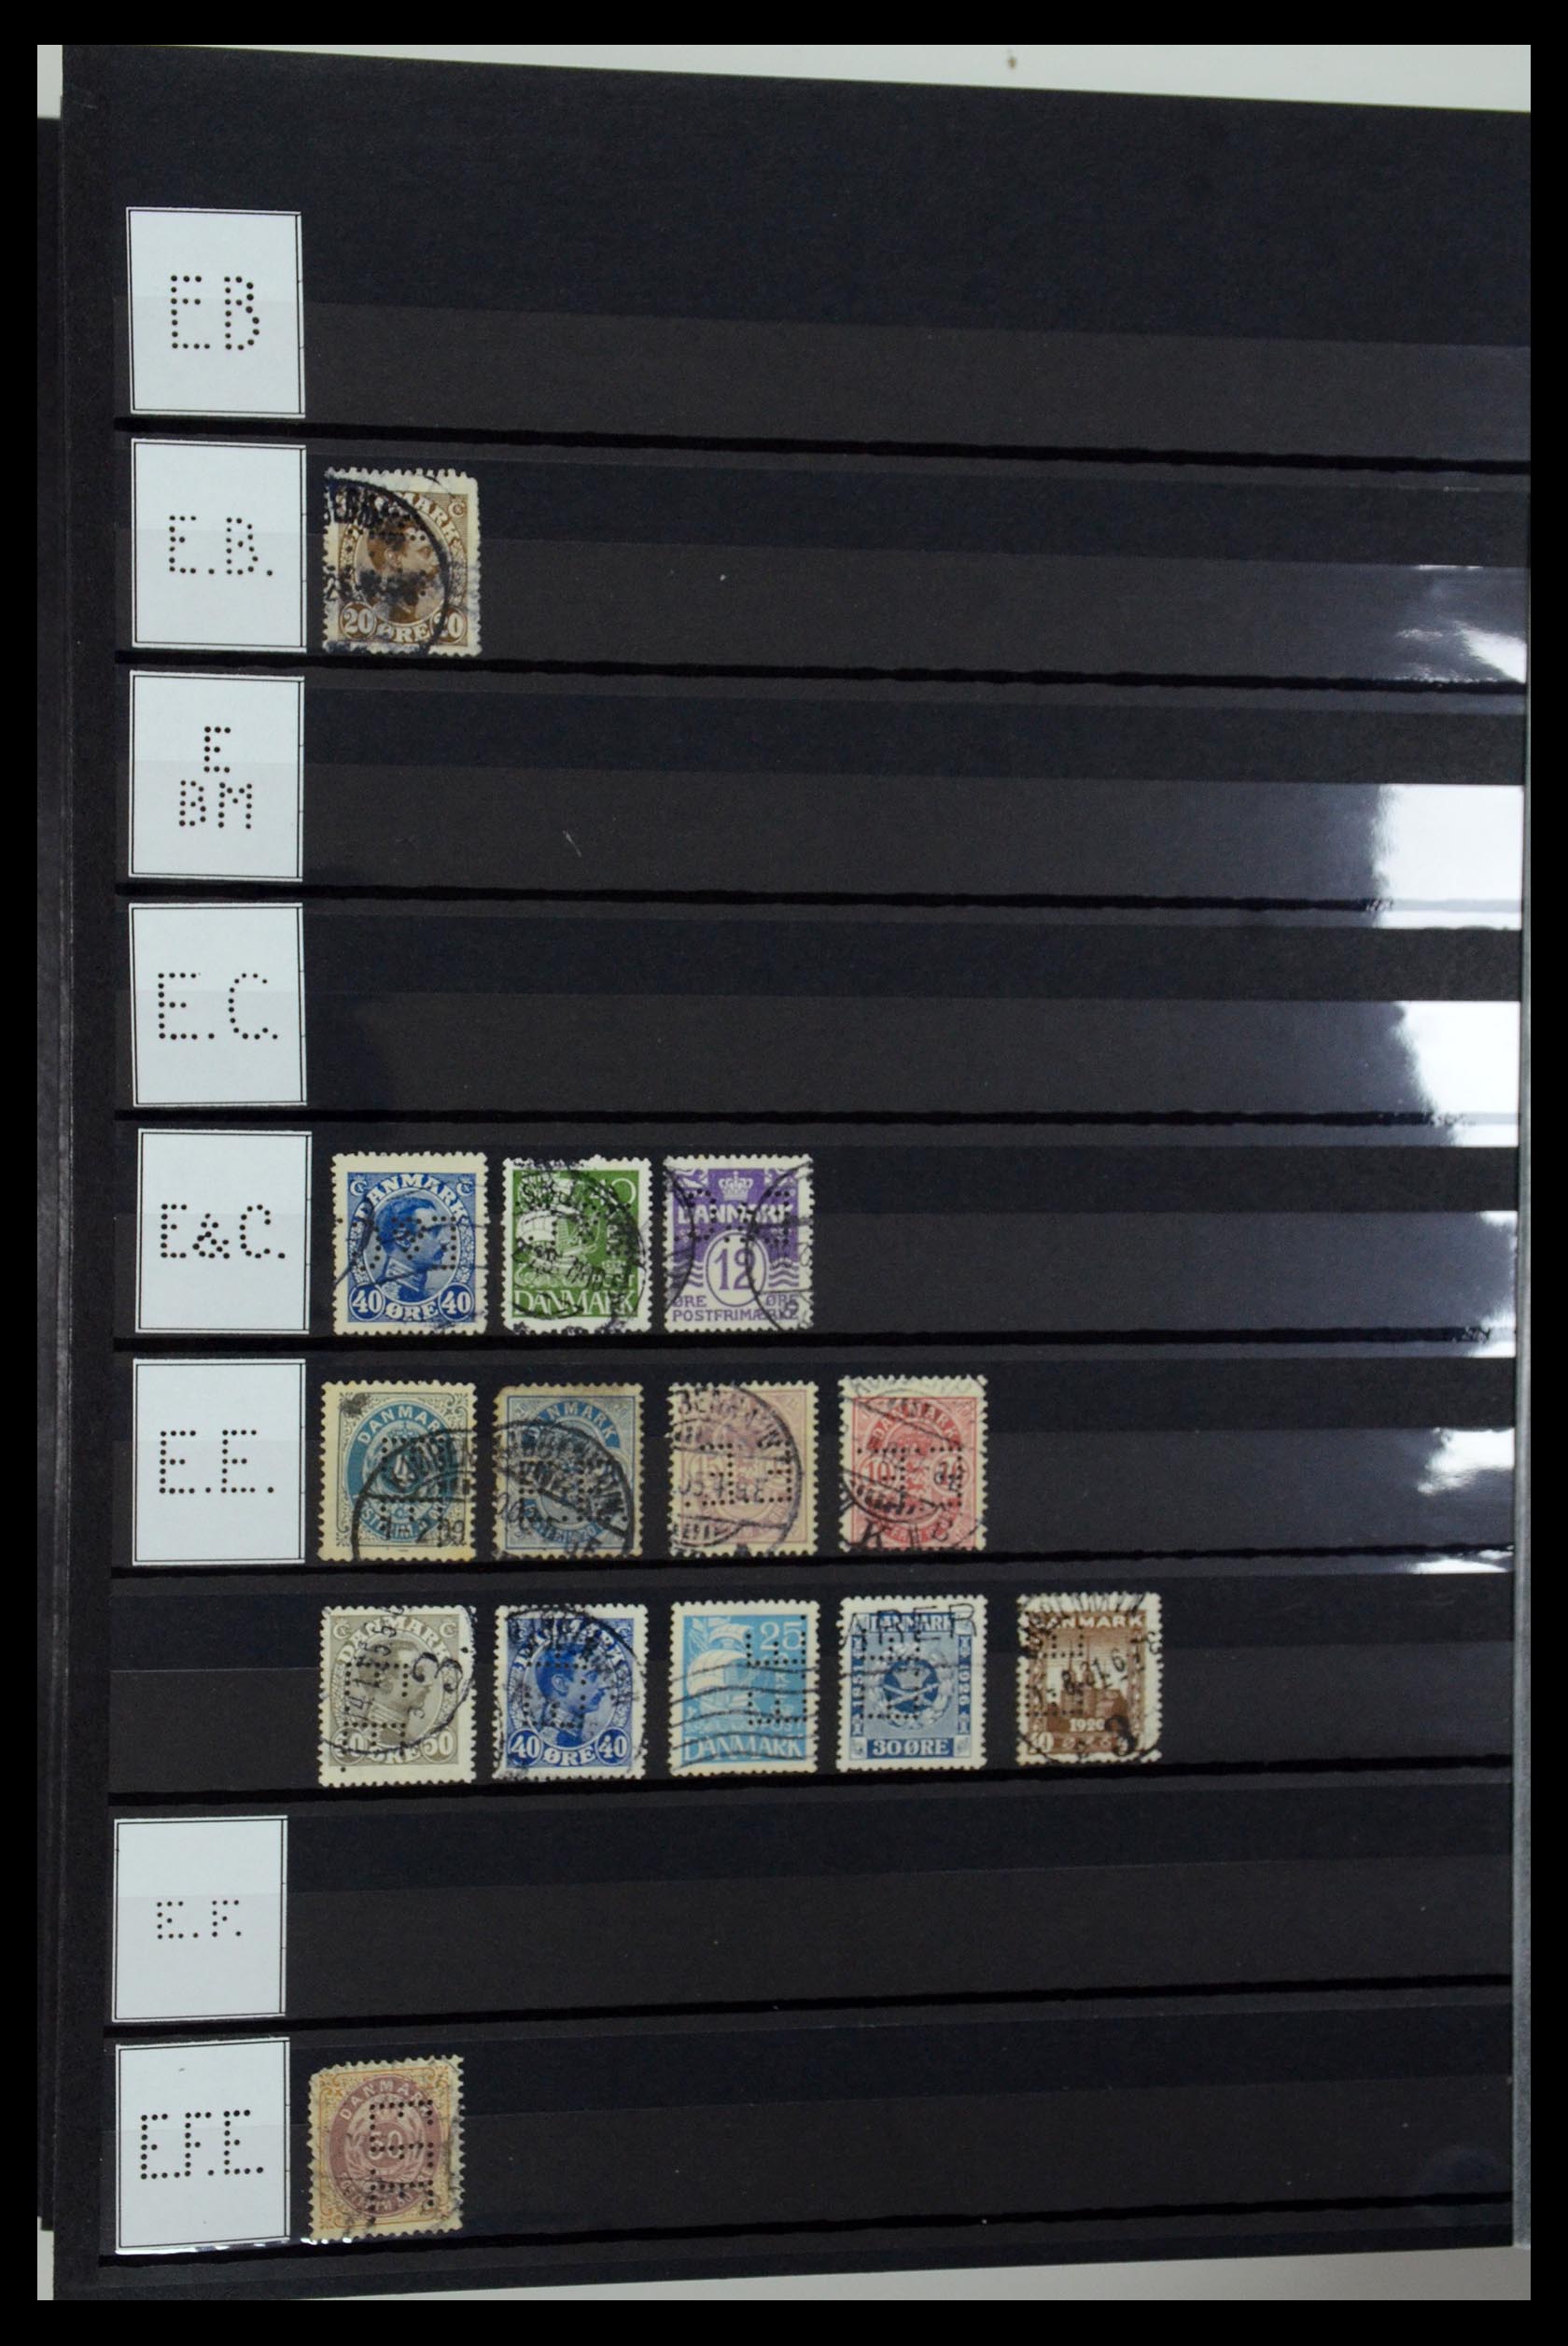 36396 043 - Stamp collection 36396 Denmark perfins.